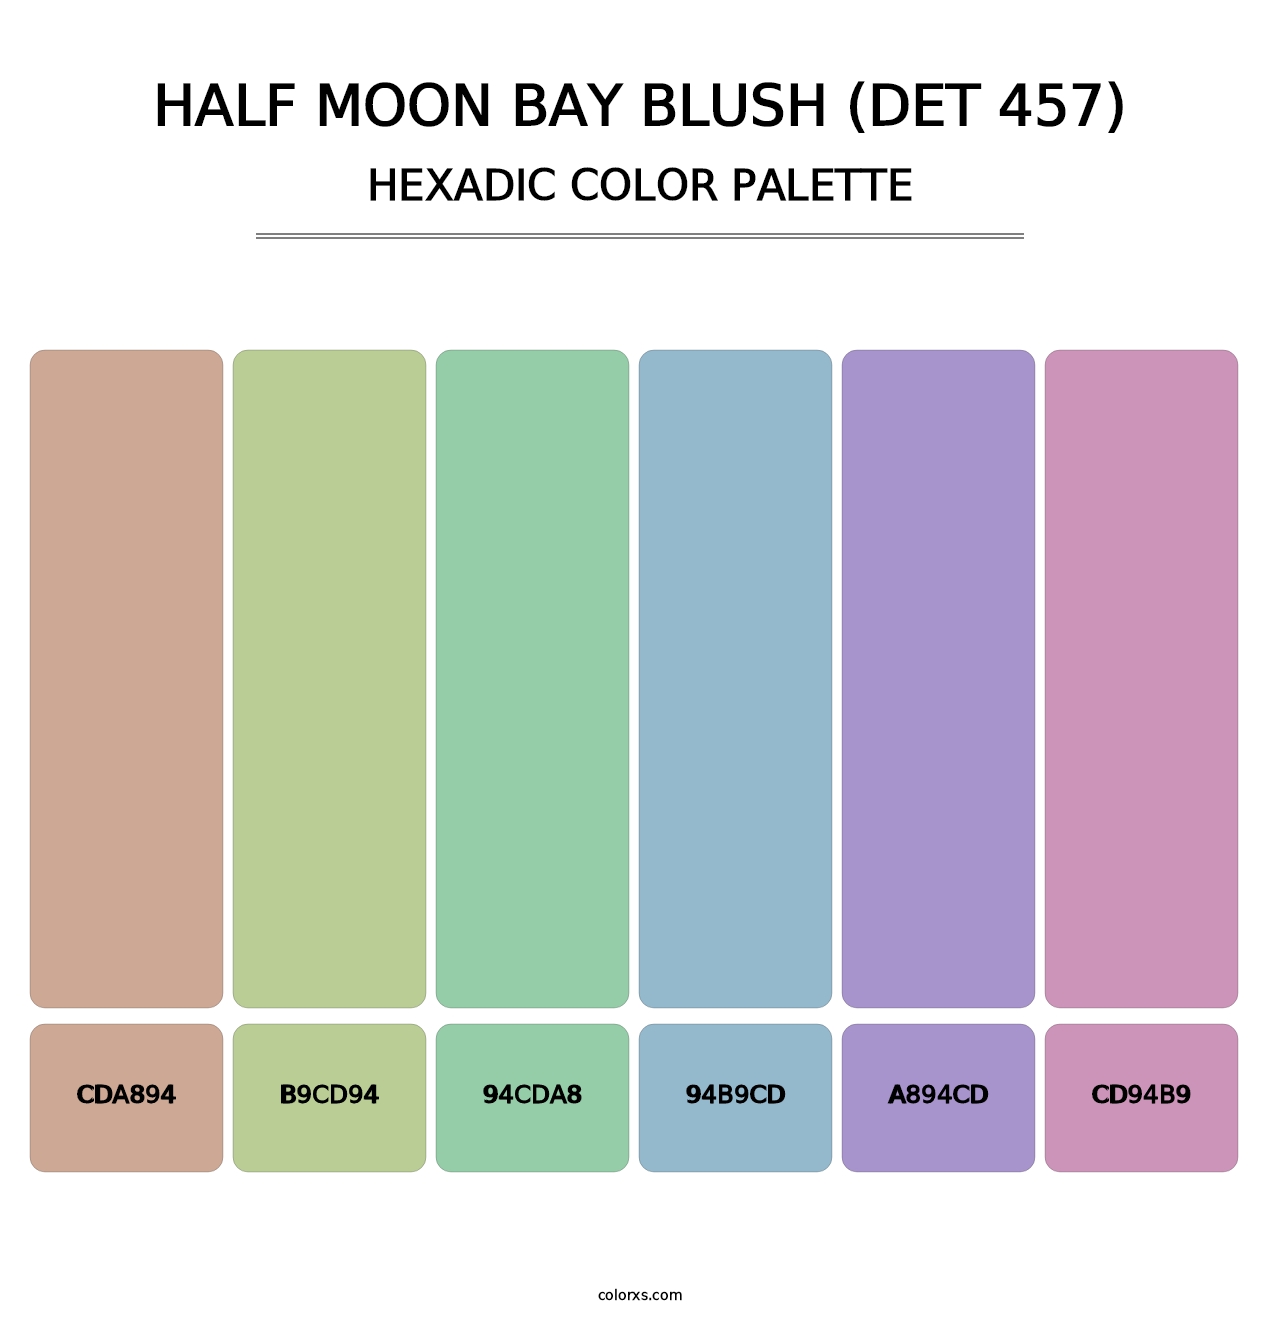 Half Moon Bay Blush (DET 457) - Hexadic Color Palette